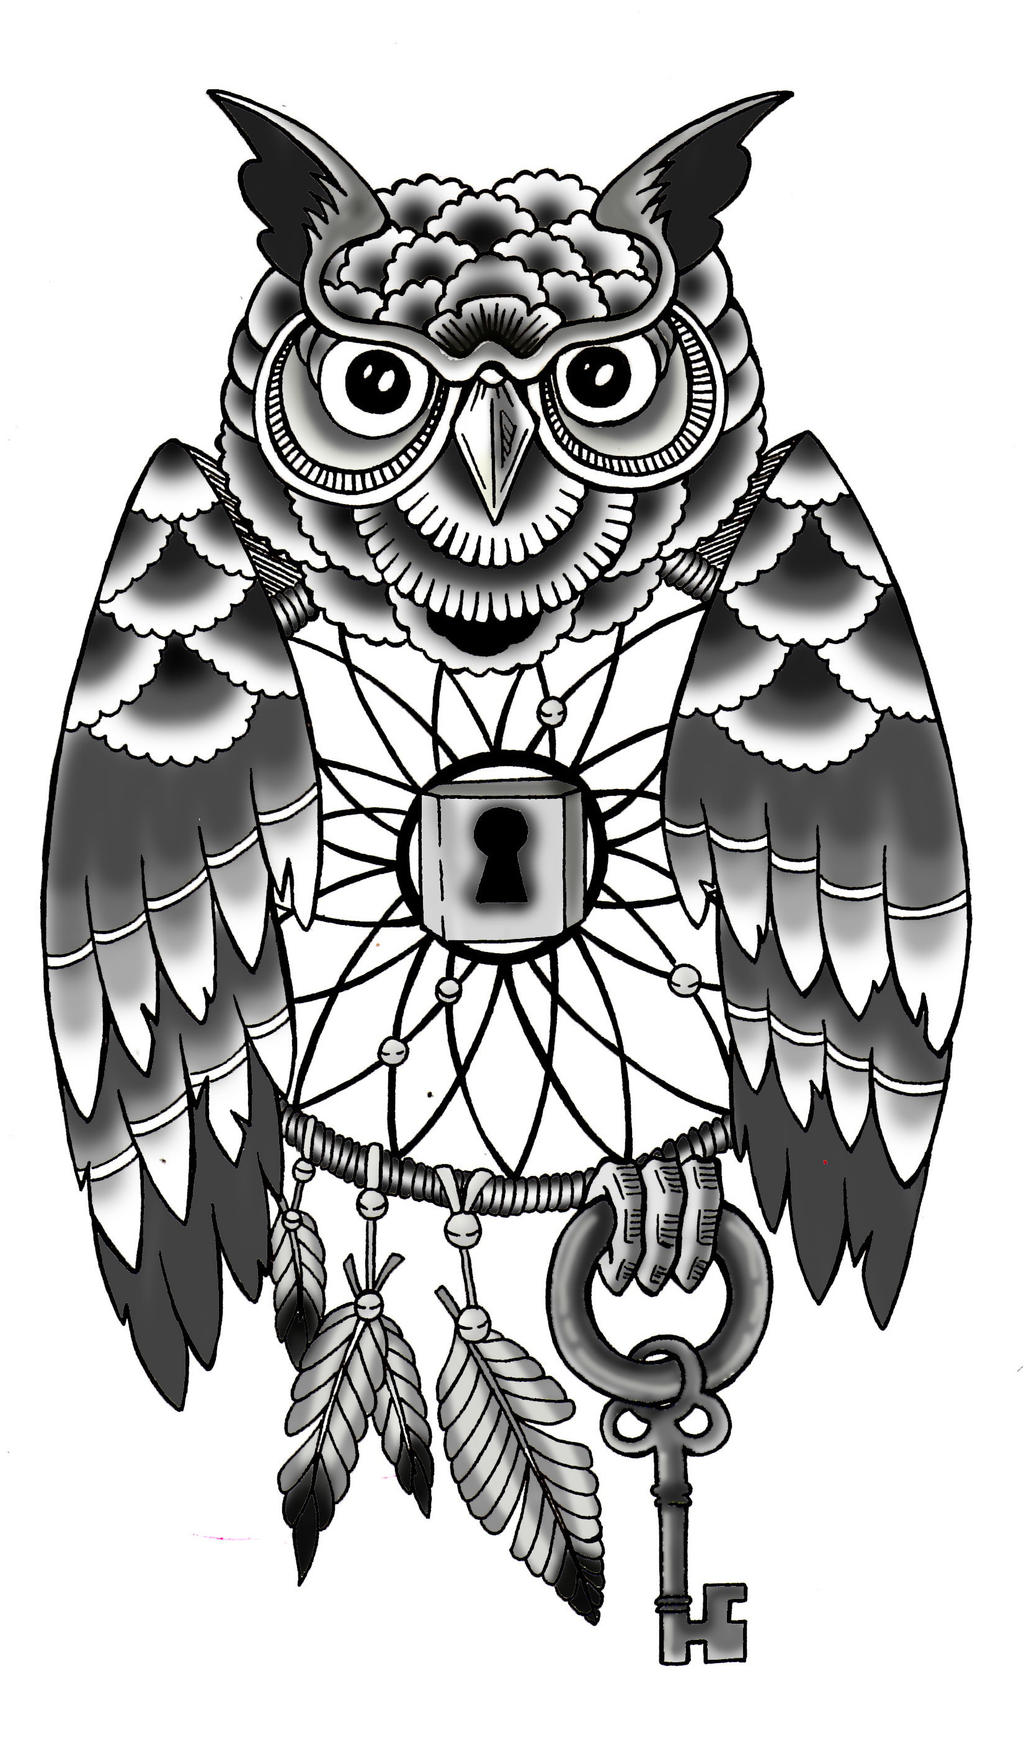 Tattoo Owl Lock and Dreamcatcher by RaxaMermaid on DeviantArt